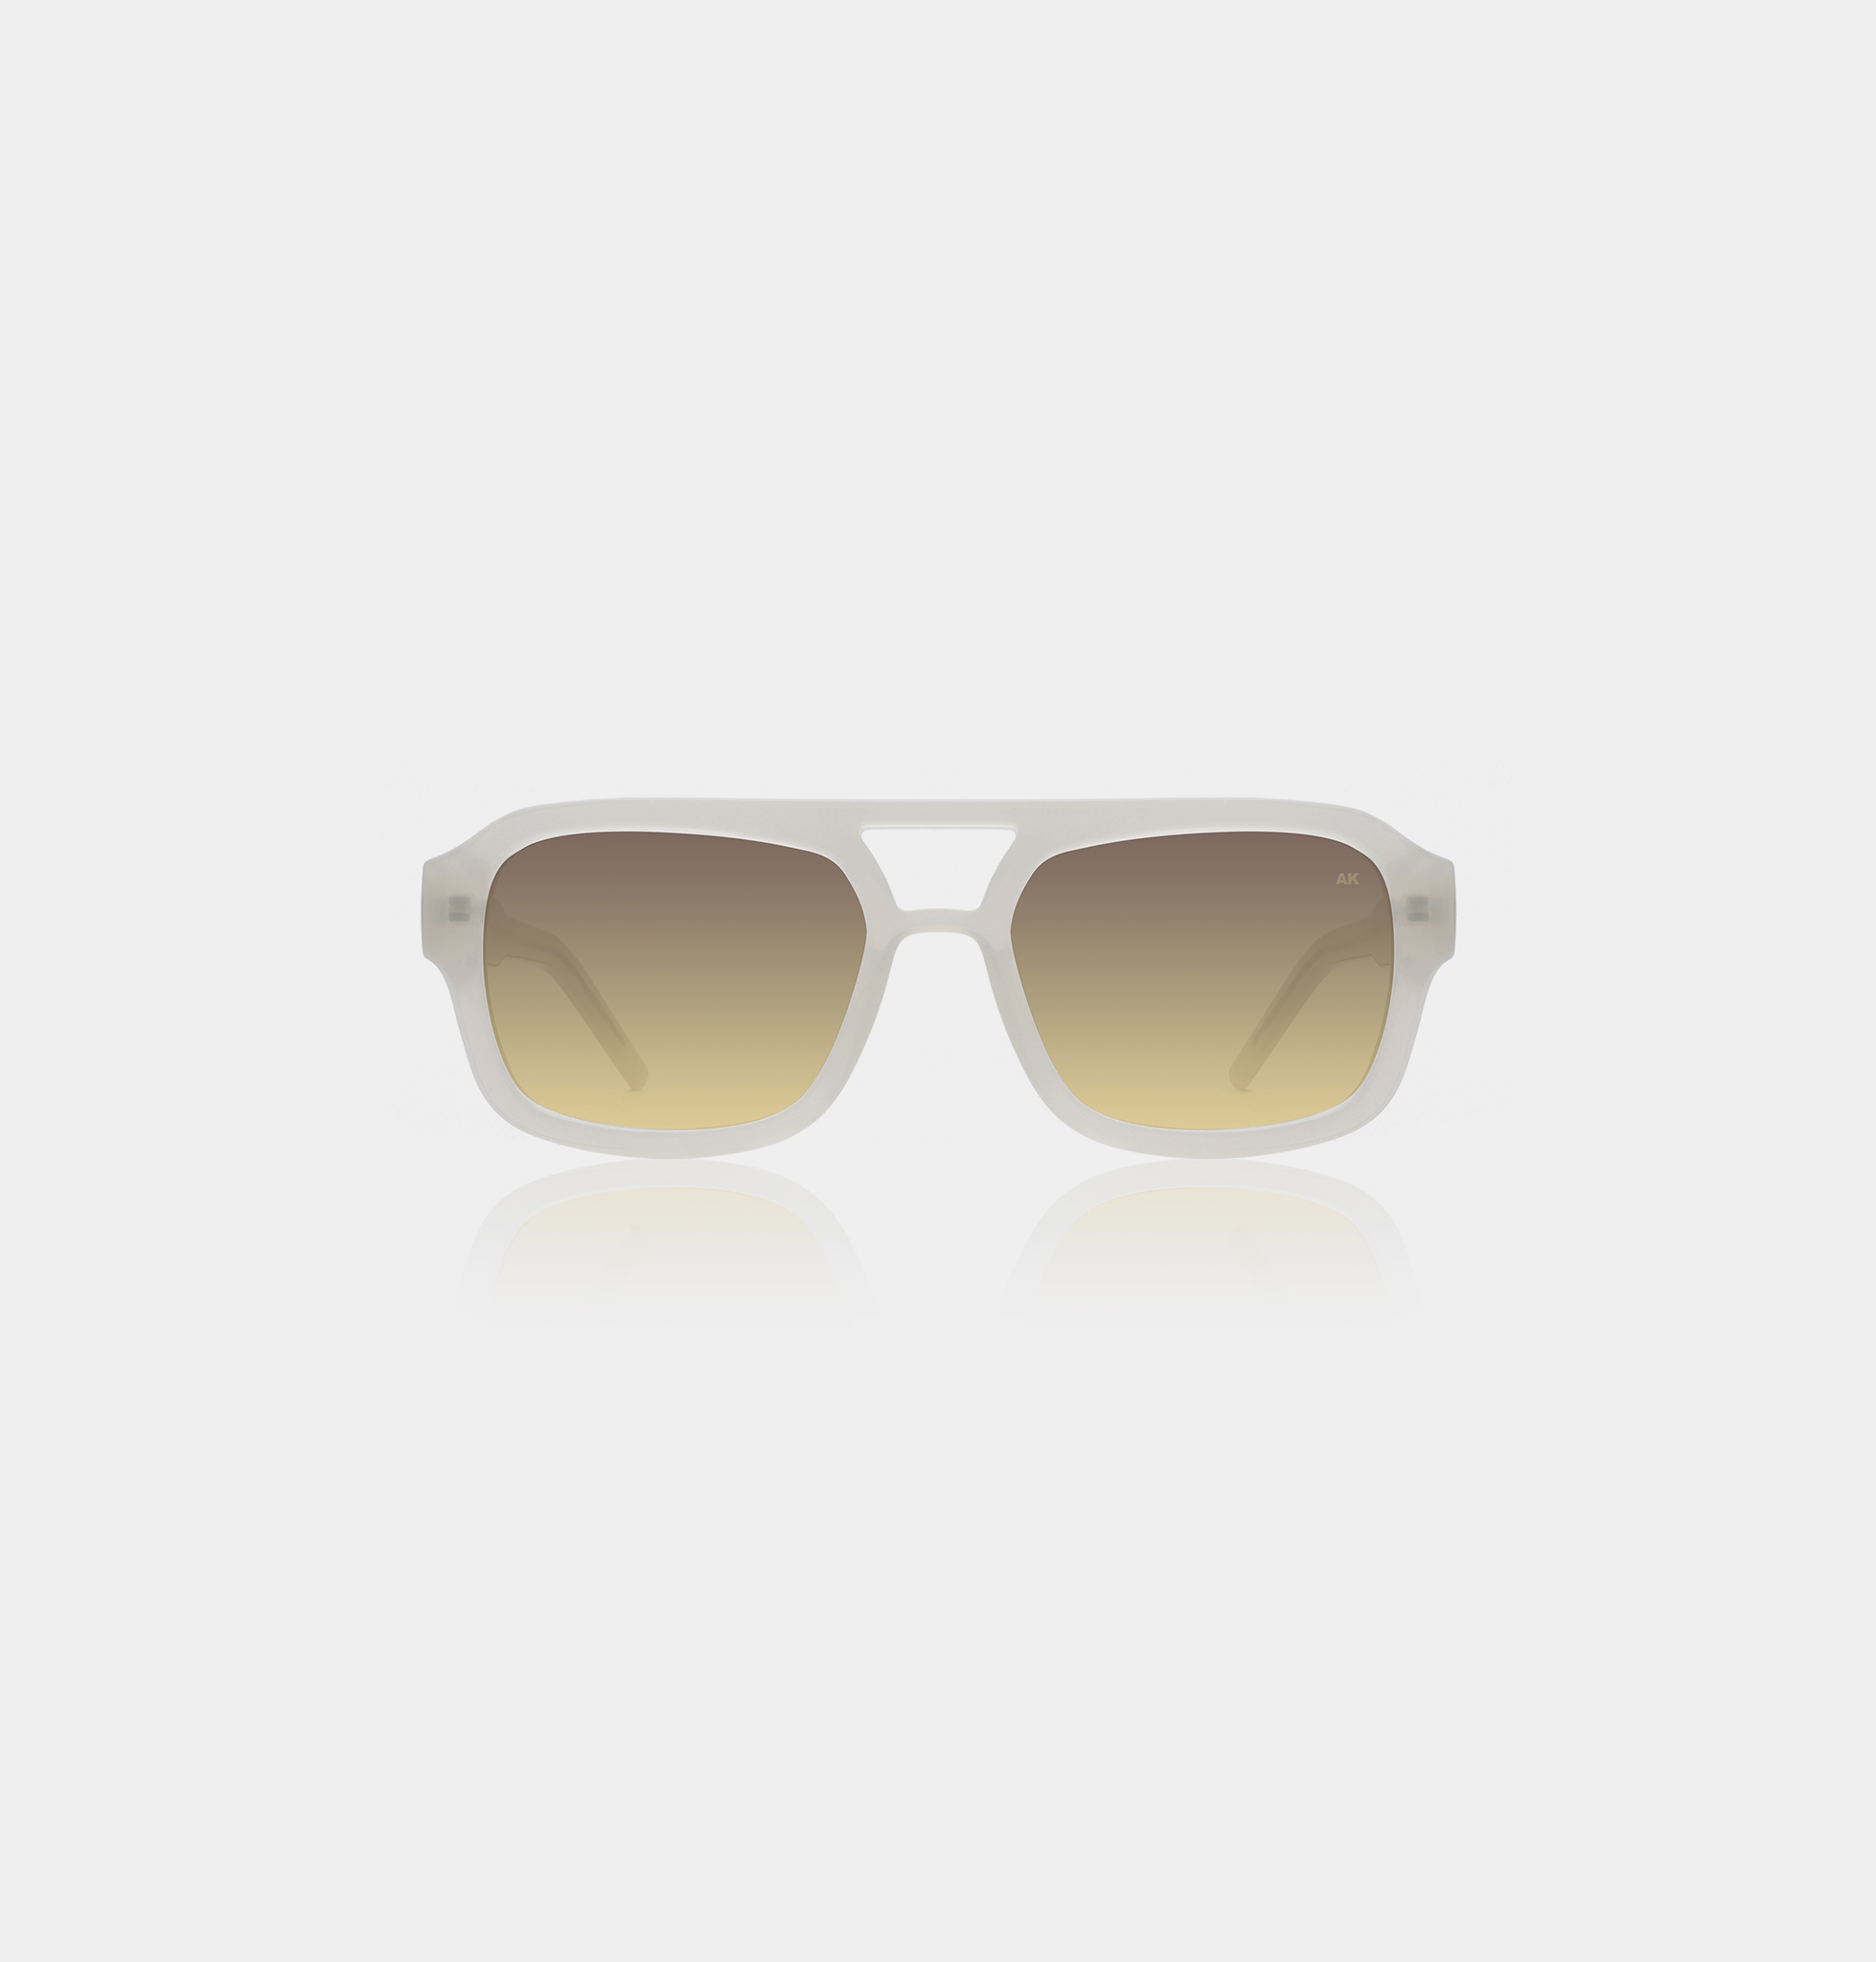 A.Kjaerbede zonnebril model KAYA kleur wit met oker glazen AKsunnies bril sunglasses eyewear